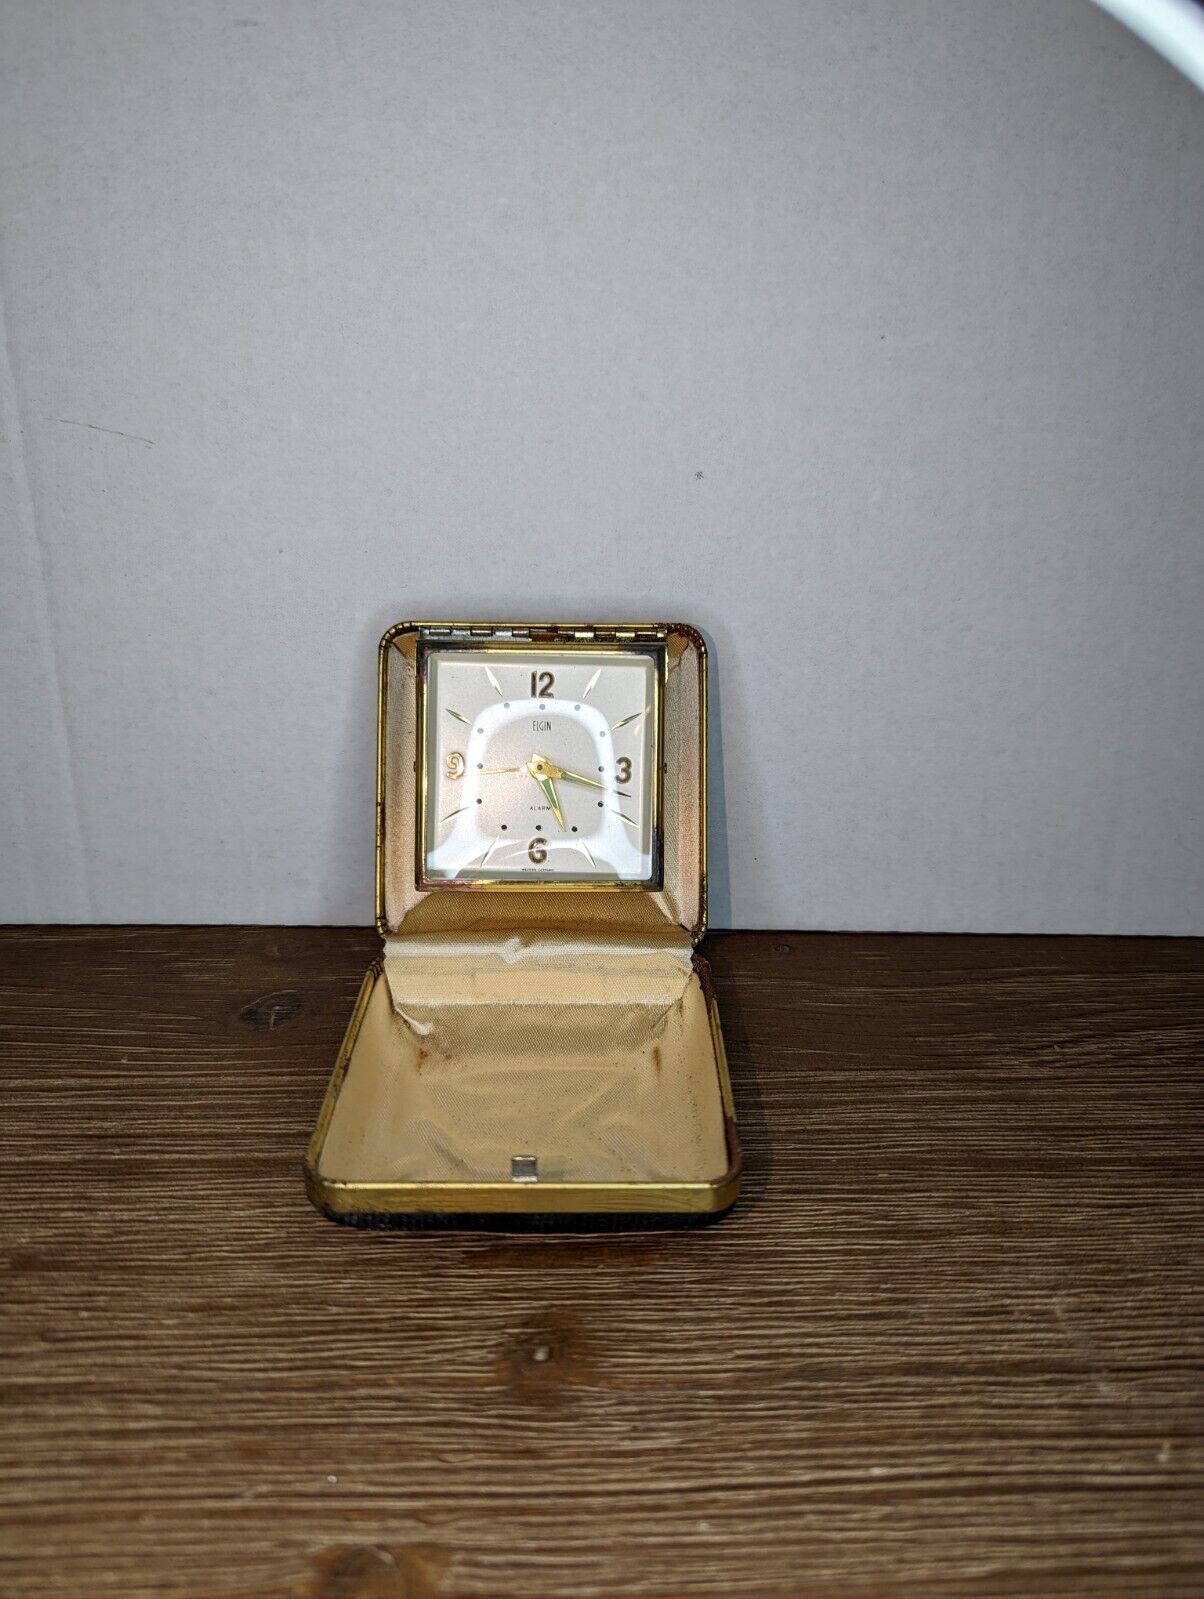 Vintage Rare Elgin folding Travel Alarm clock 1960s 1970s - parts